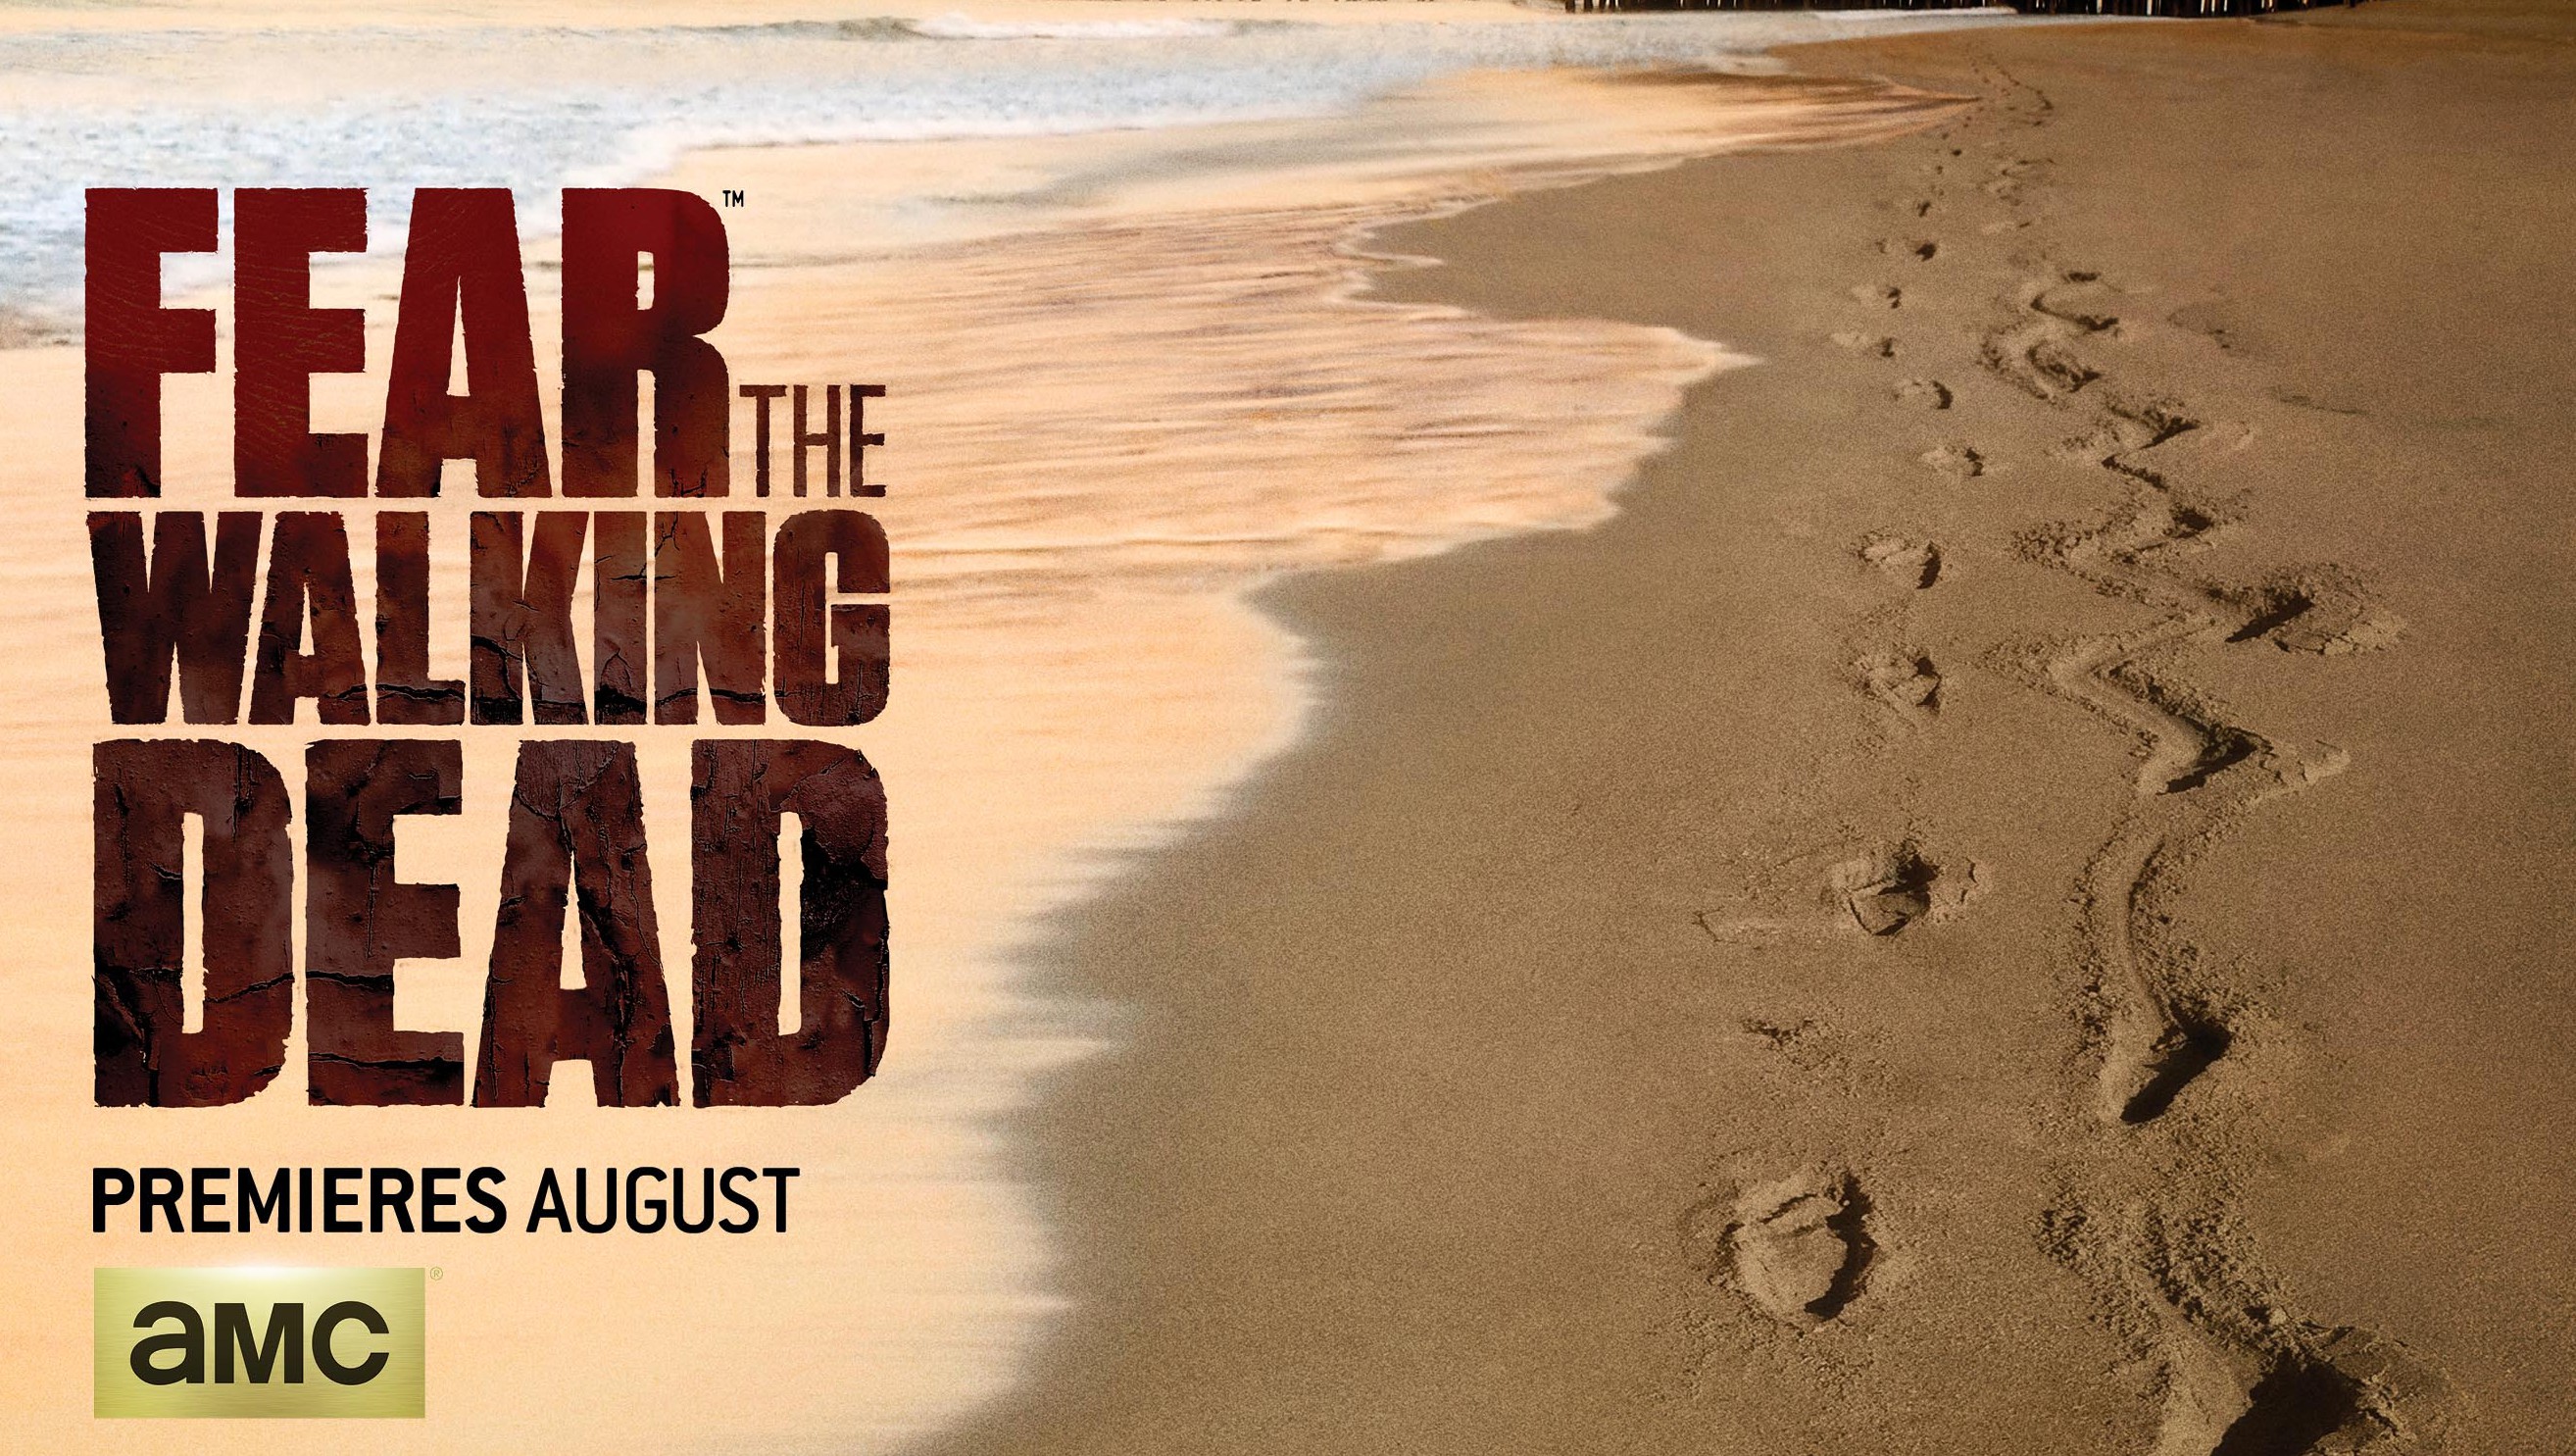 When Does ‘Fear the Walking Dead’ Air?